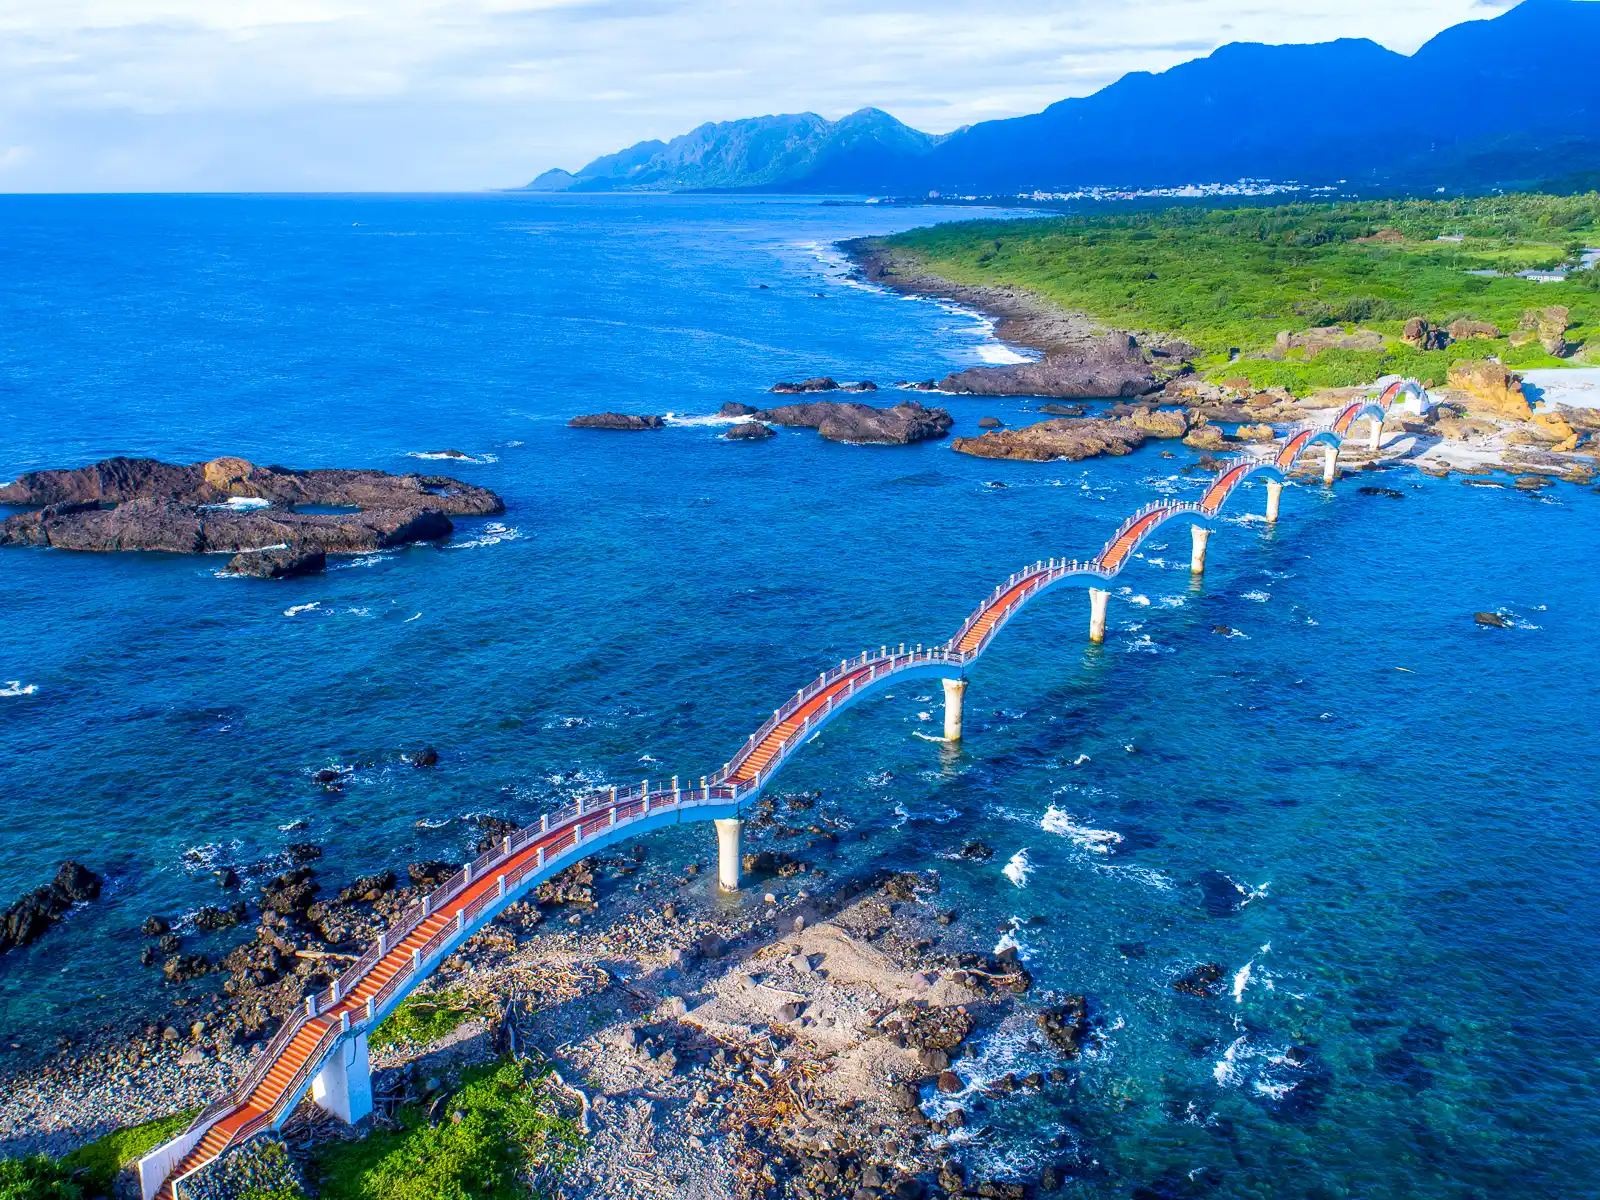 The undulating Eight Arch Bridge links the rocky island of Sanxiantai with the mainland.